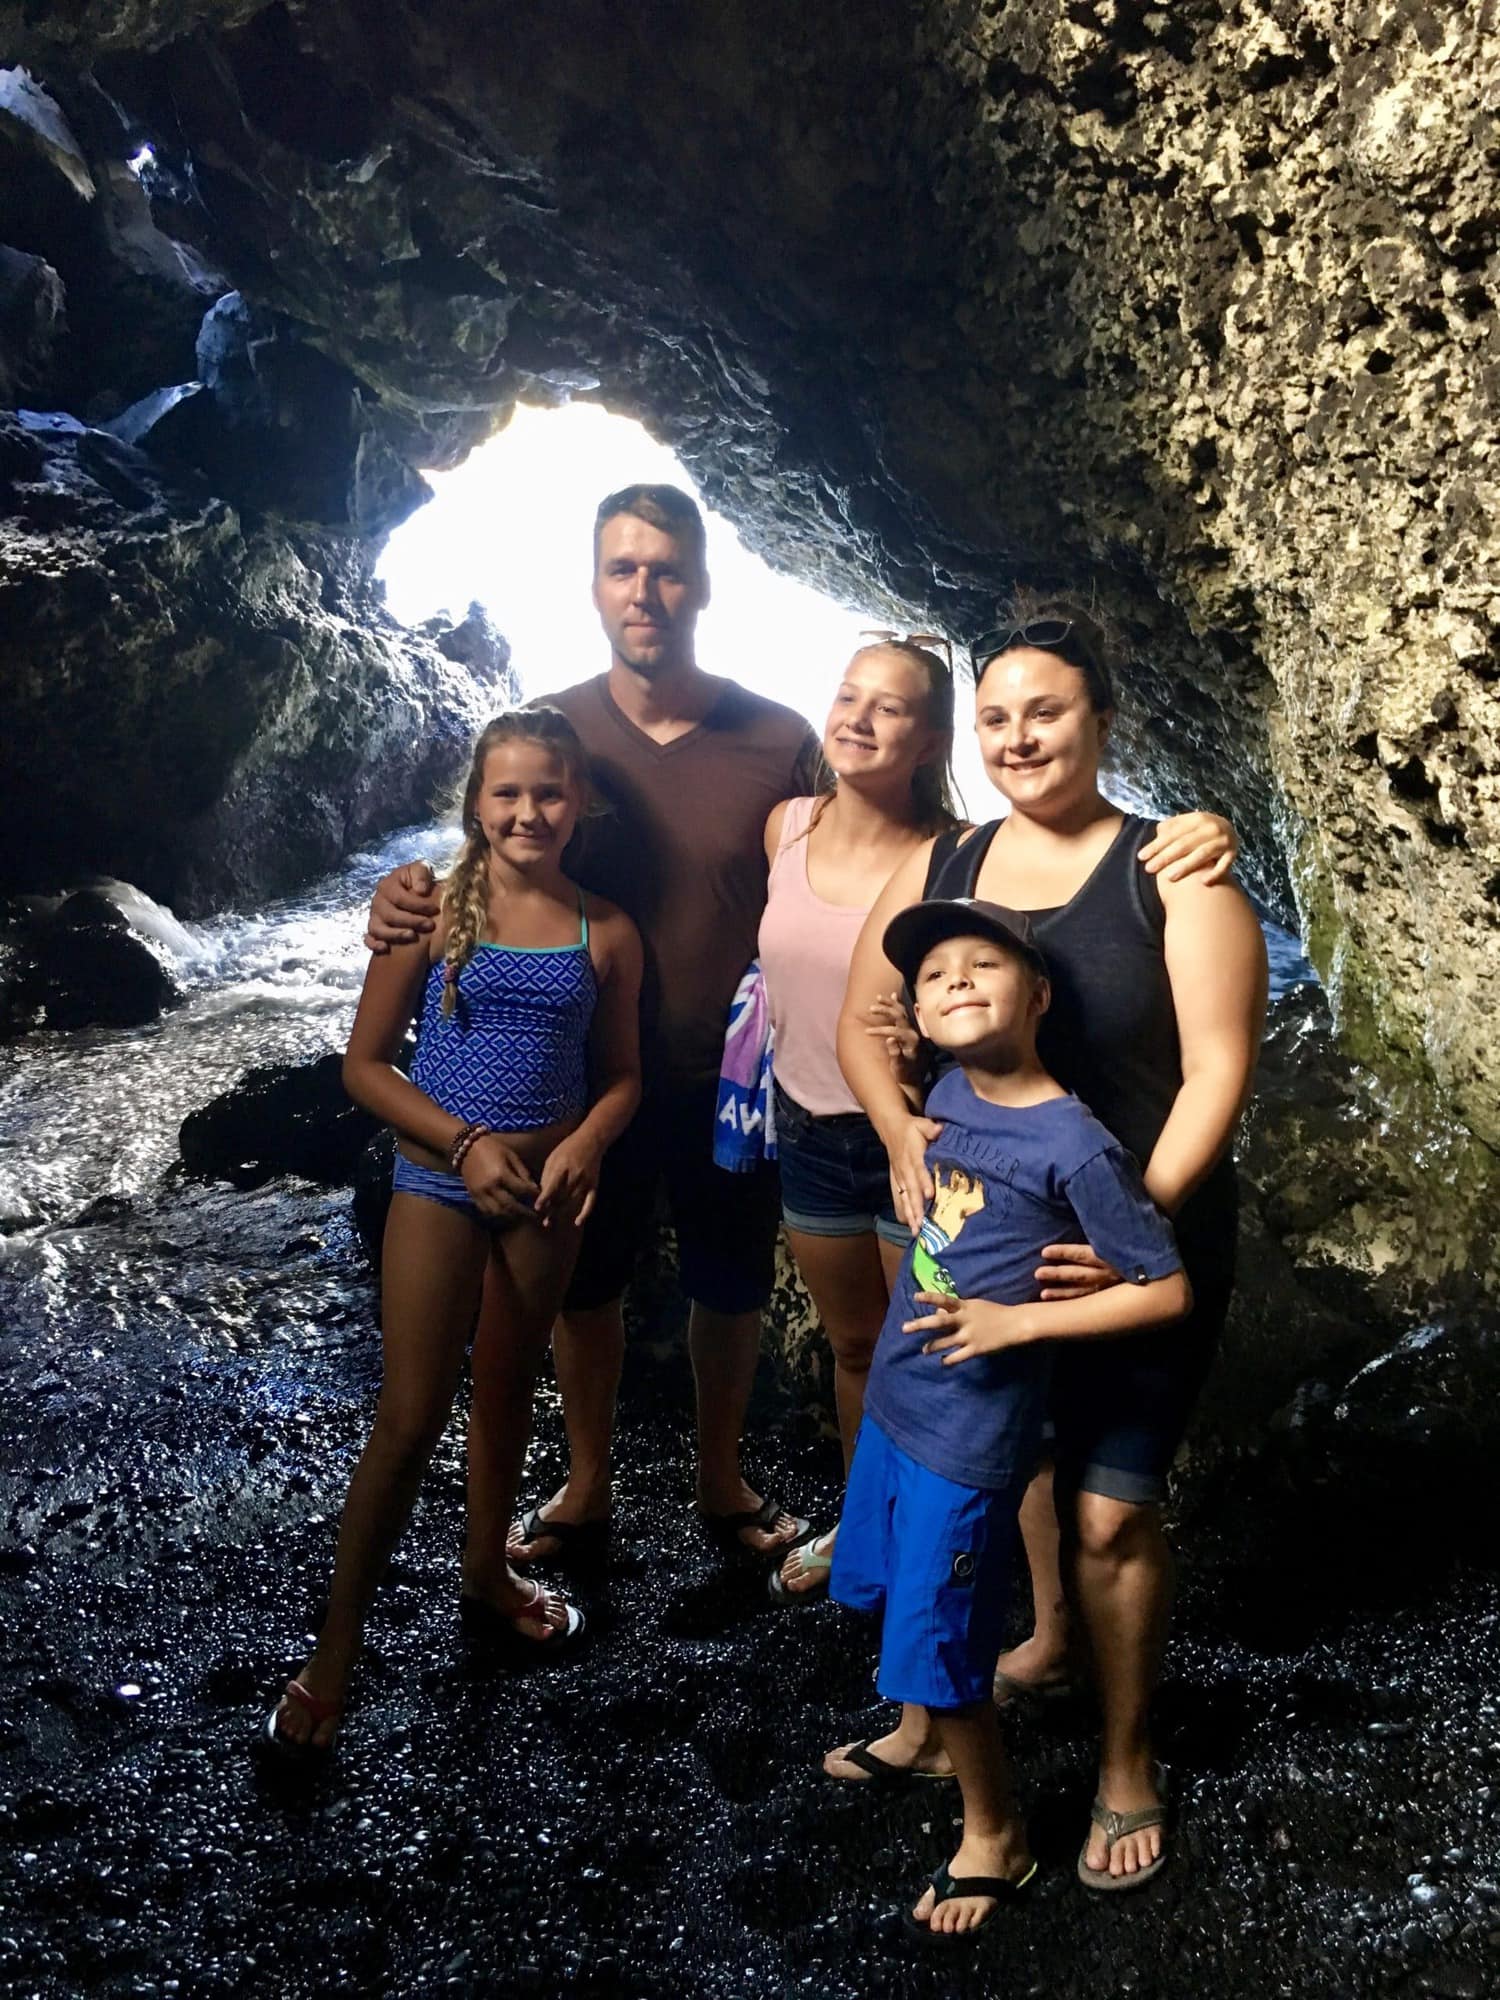 Inside the cave at Wai'anapanapa State Park in Maui, Hawaii